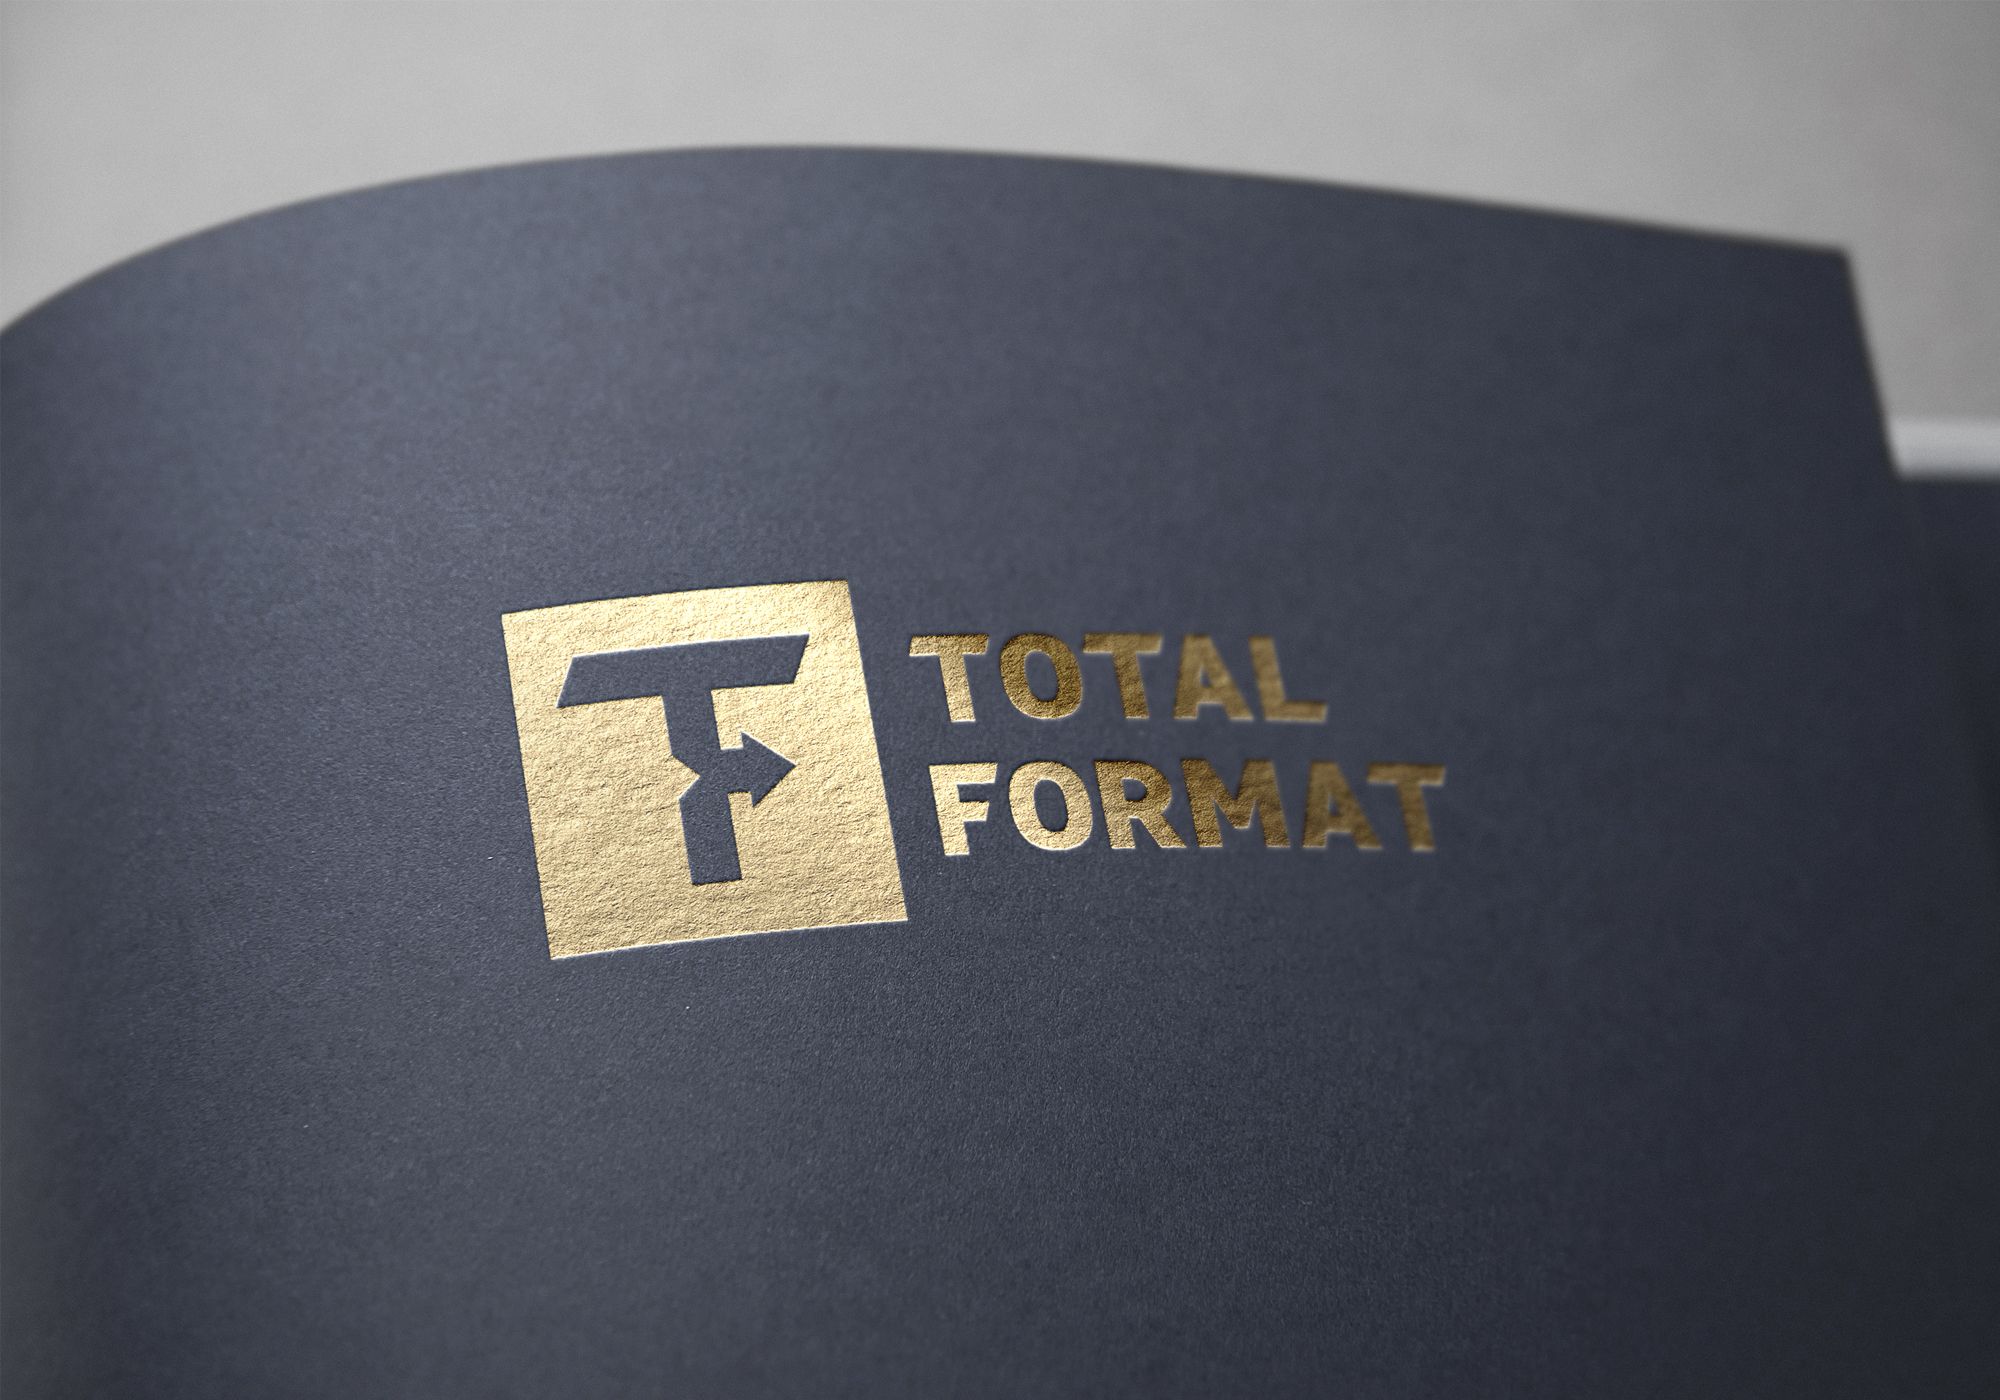 Логотип для Total Format - дизайнер nuttale